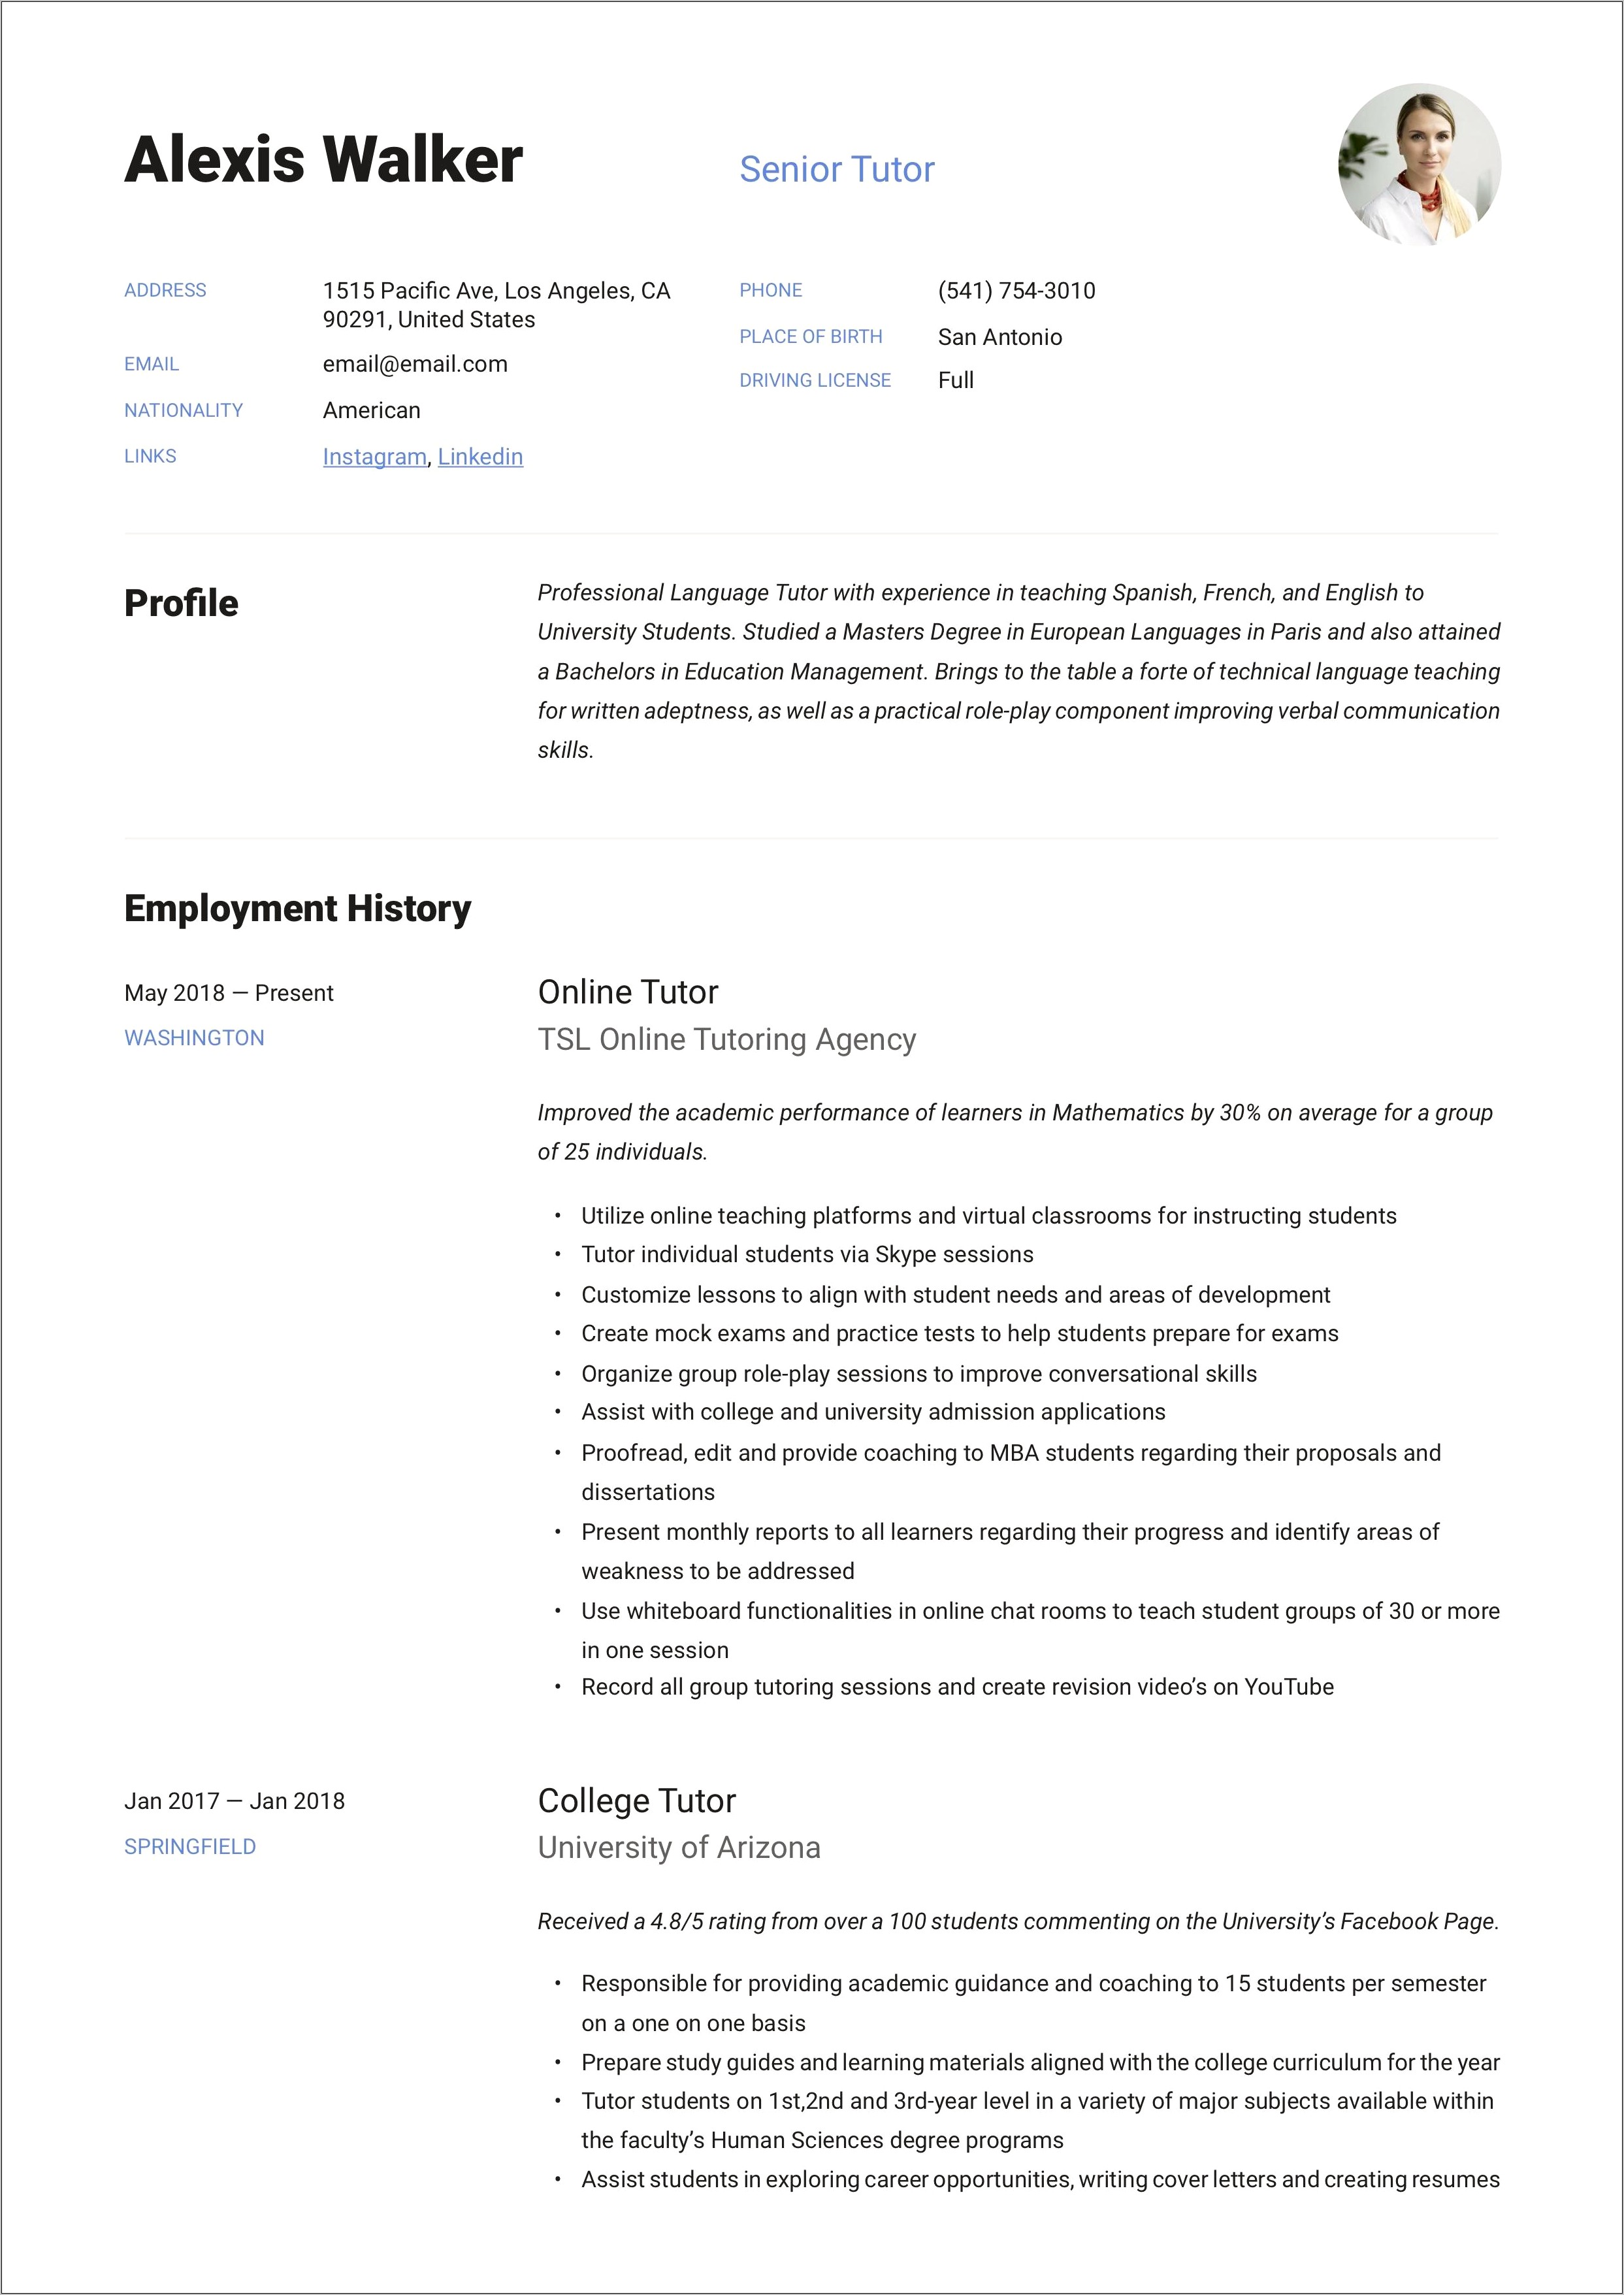 Job Description For Tutor On Resume